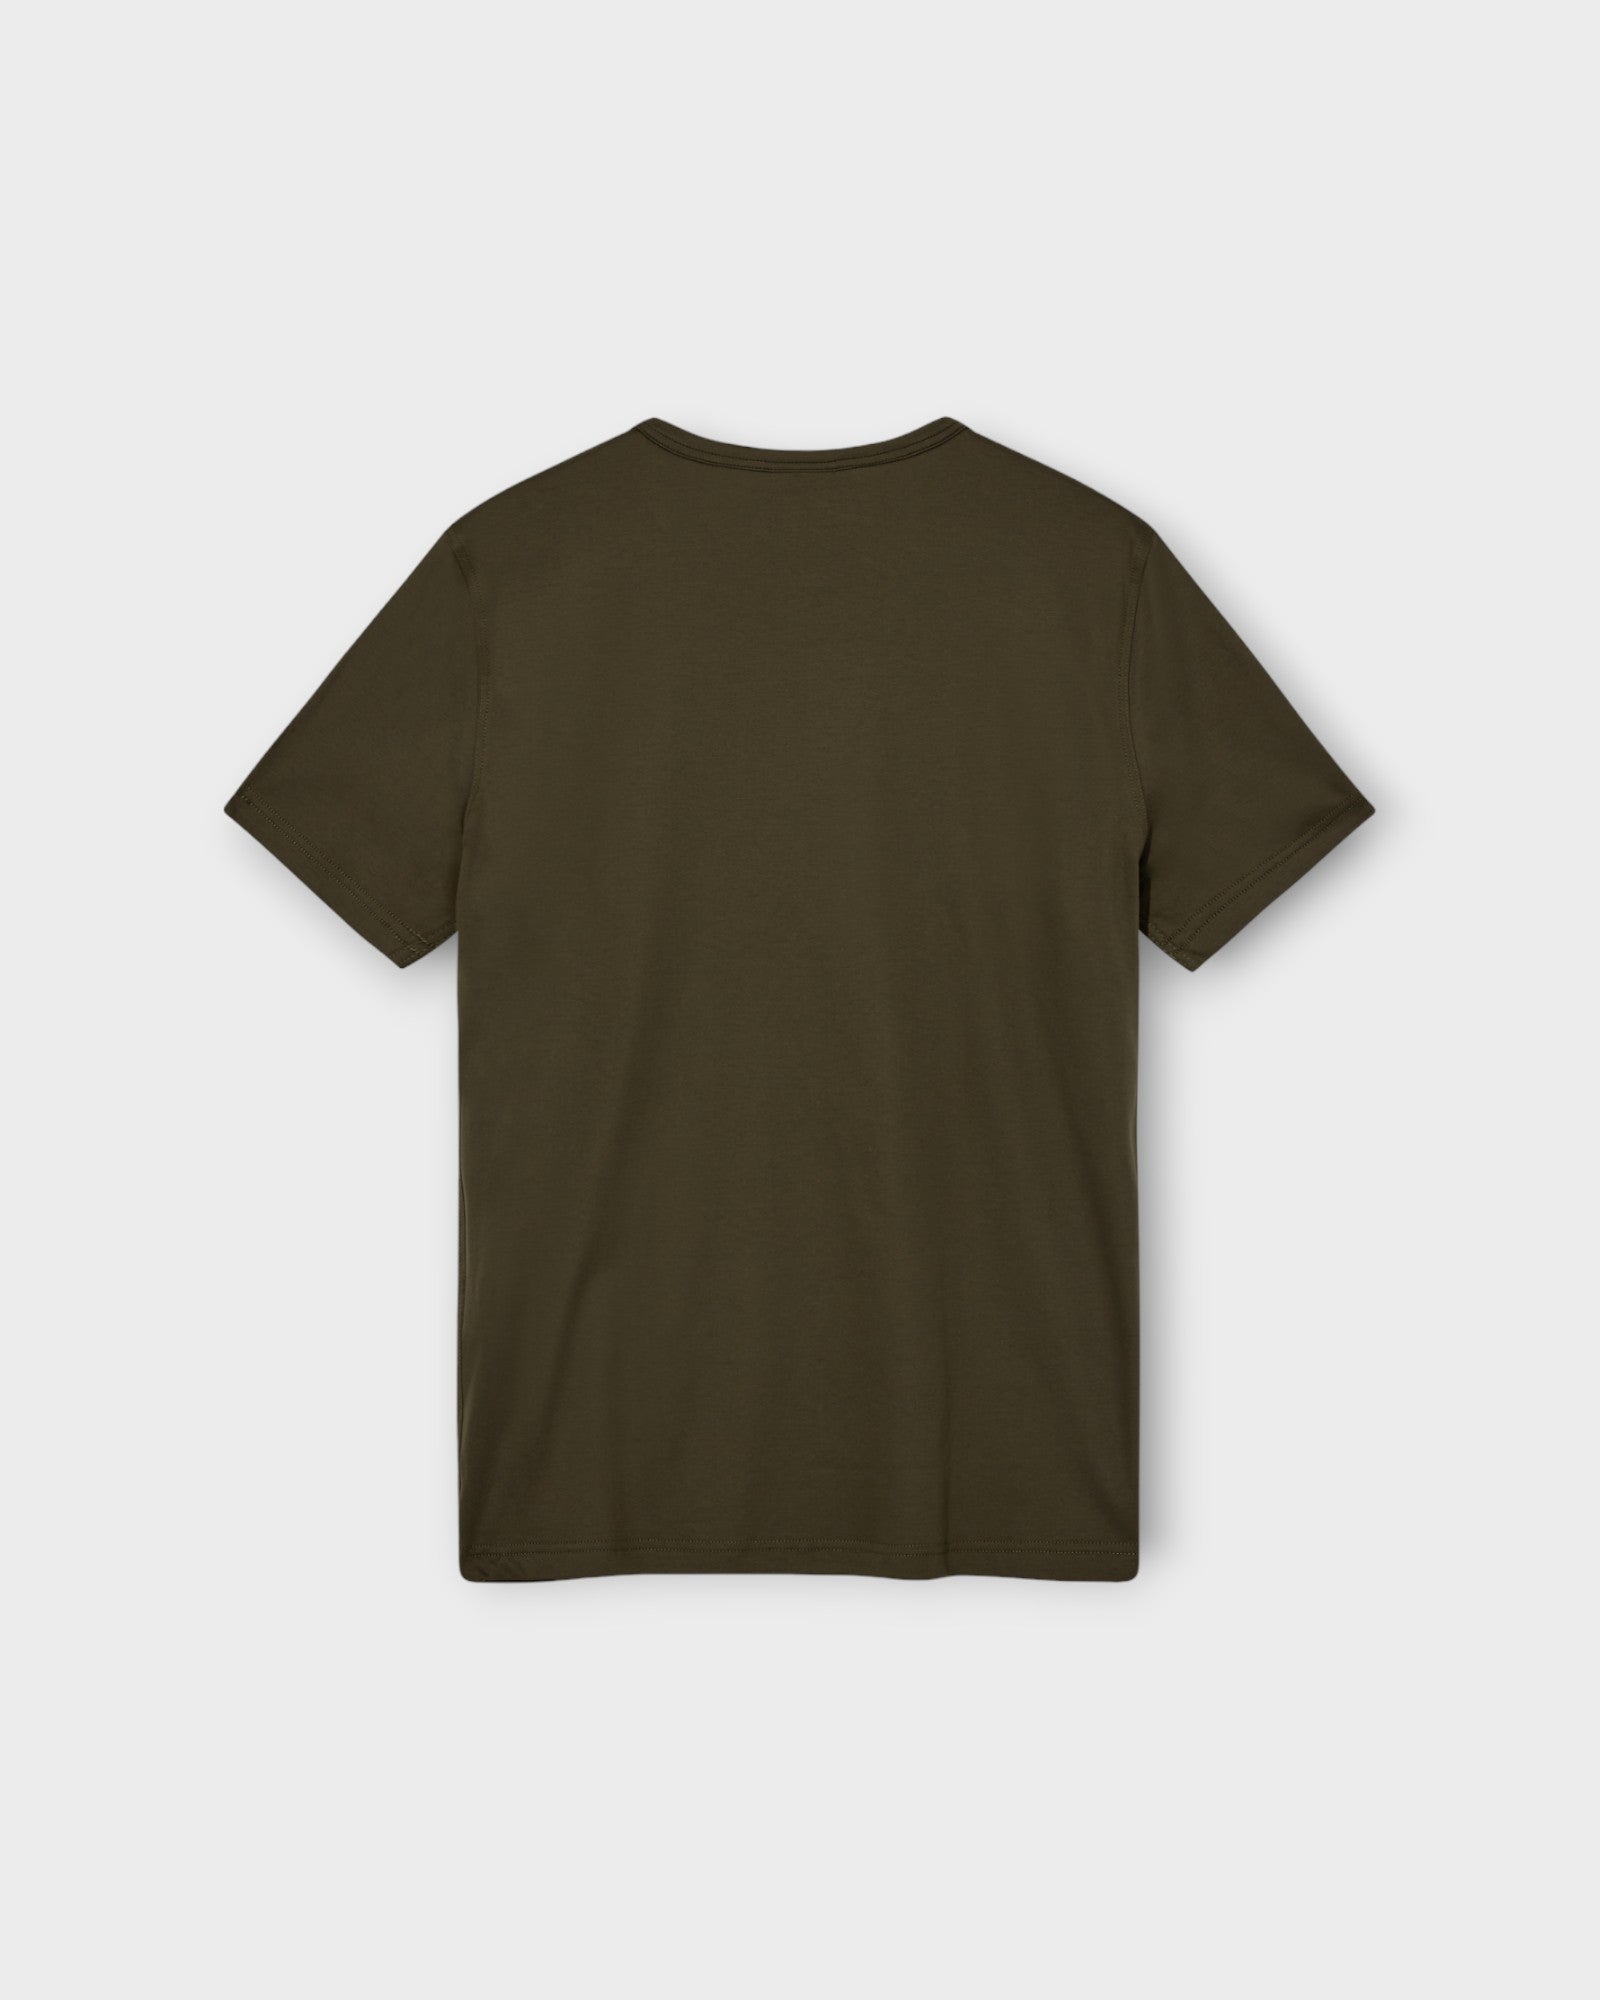  Perry Crunch O SS Tee Army fra Mos Mosh Gallery. Army grøn T-shirt til mænd. Her set bagfra.